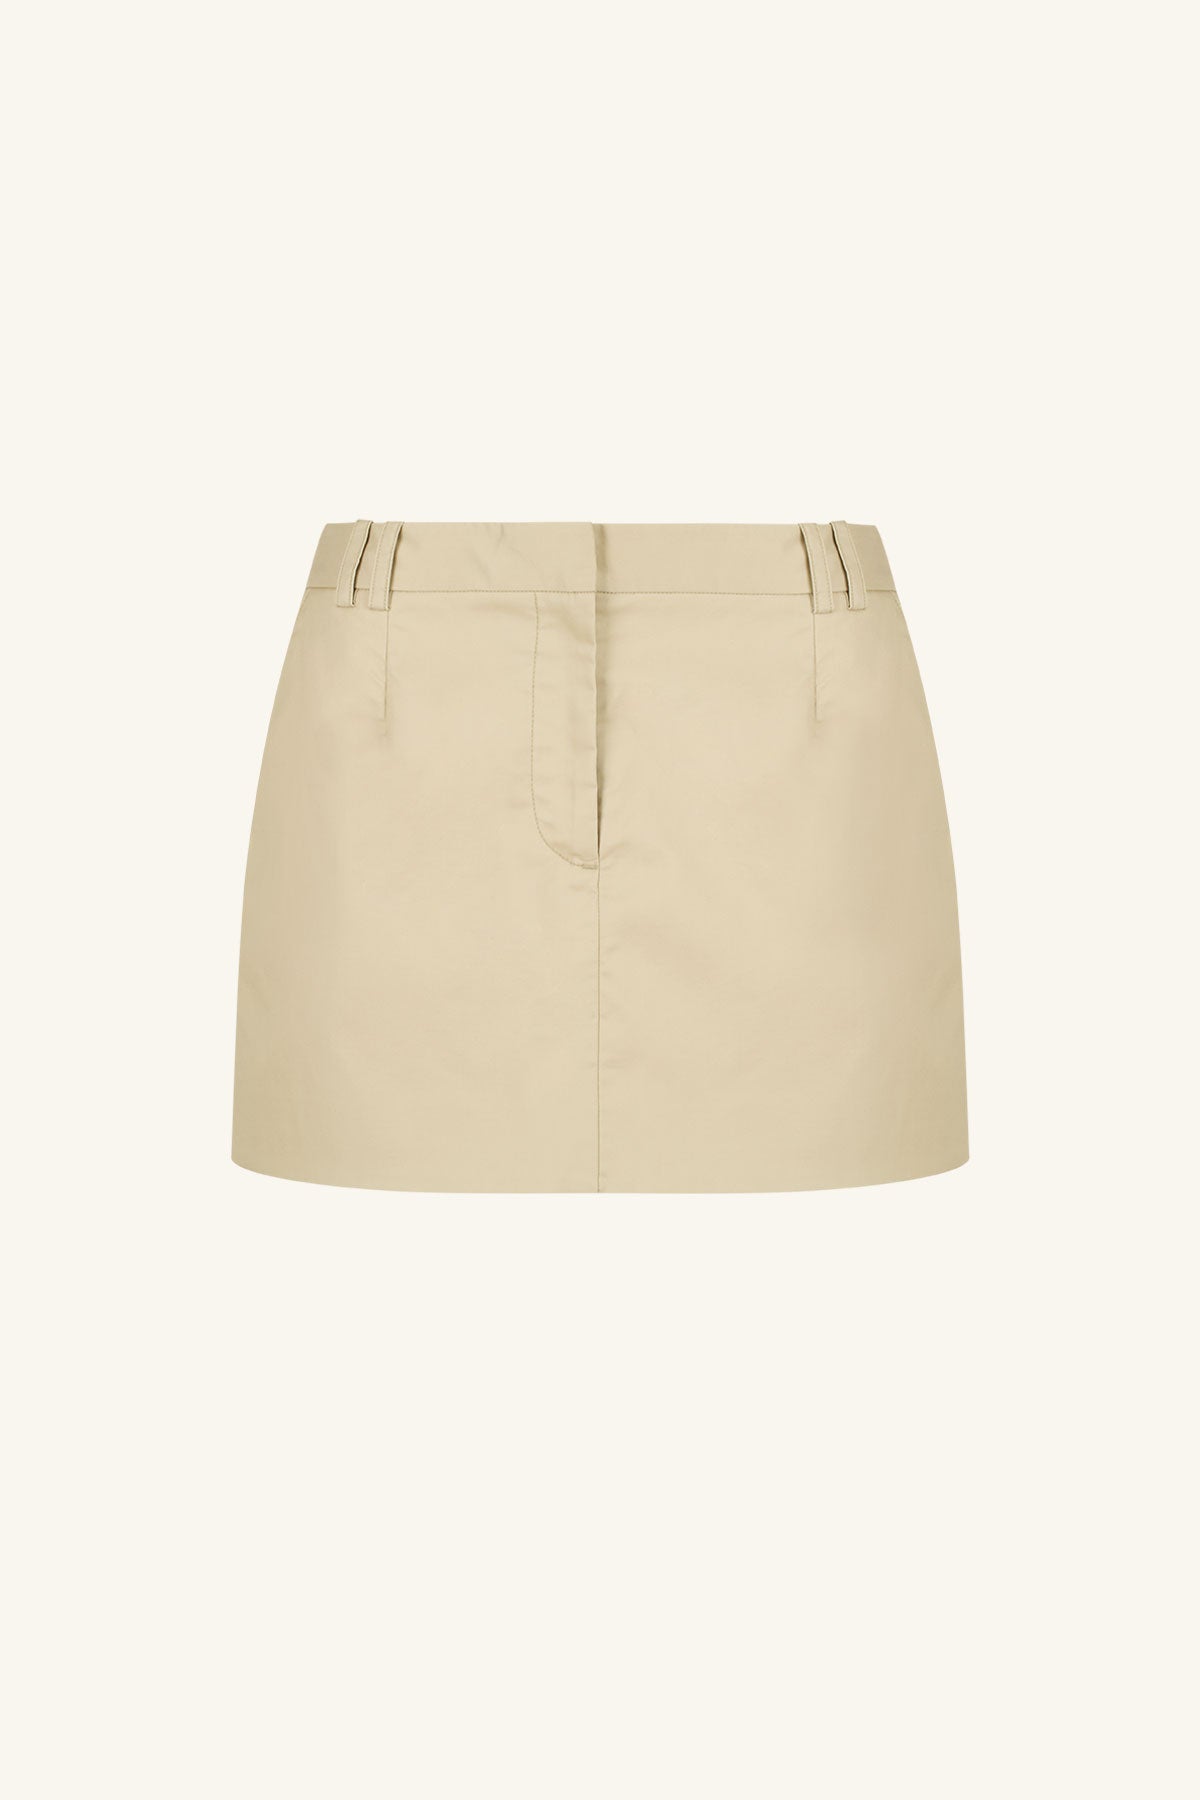 Sabato Micro Mini Skirt // Khaki Beige